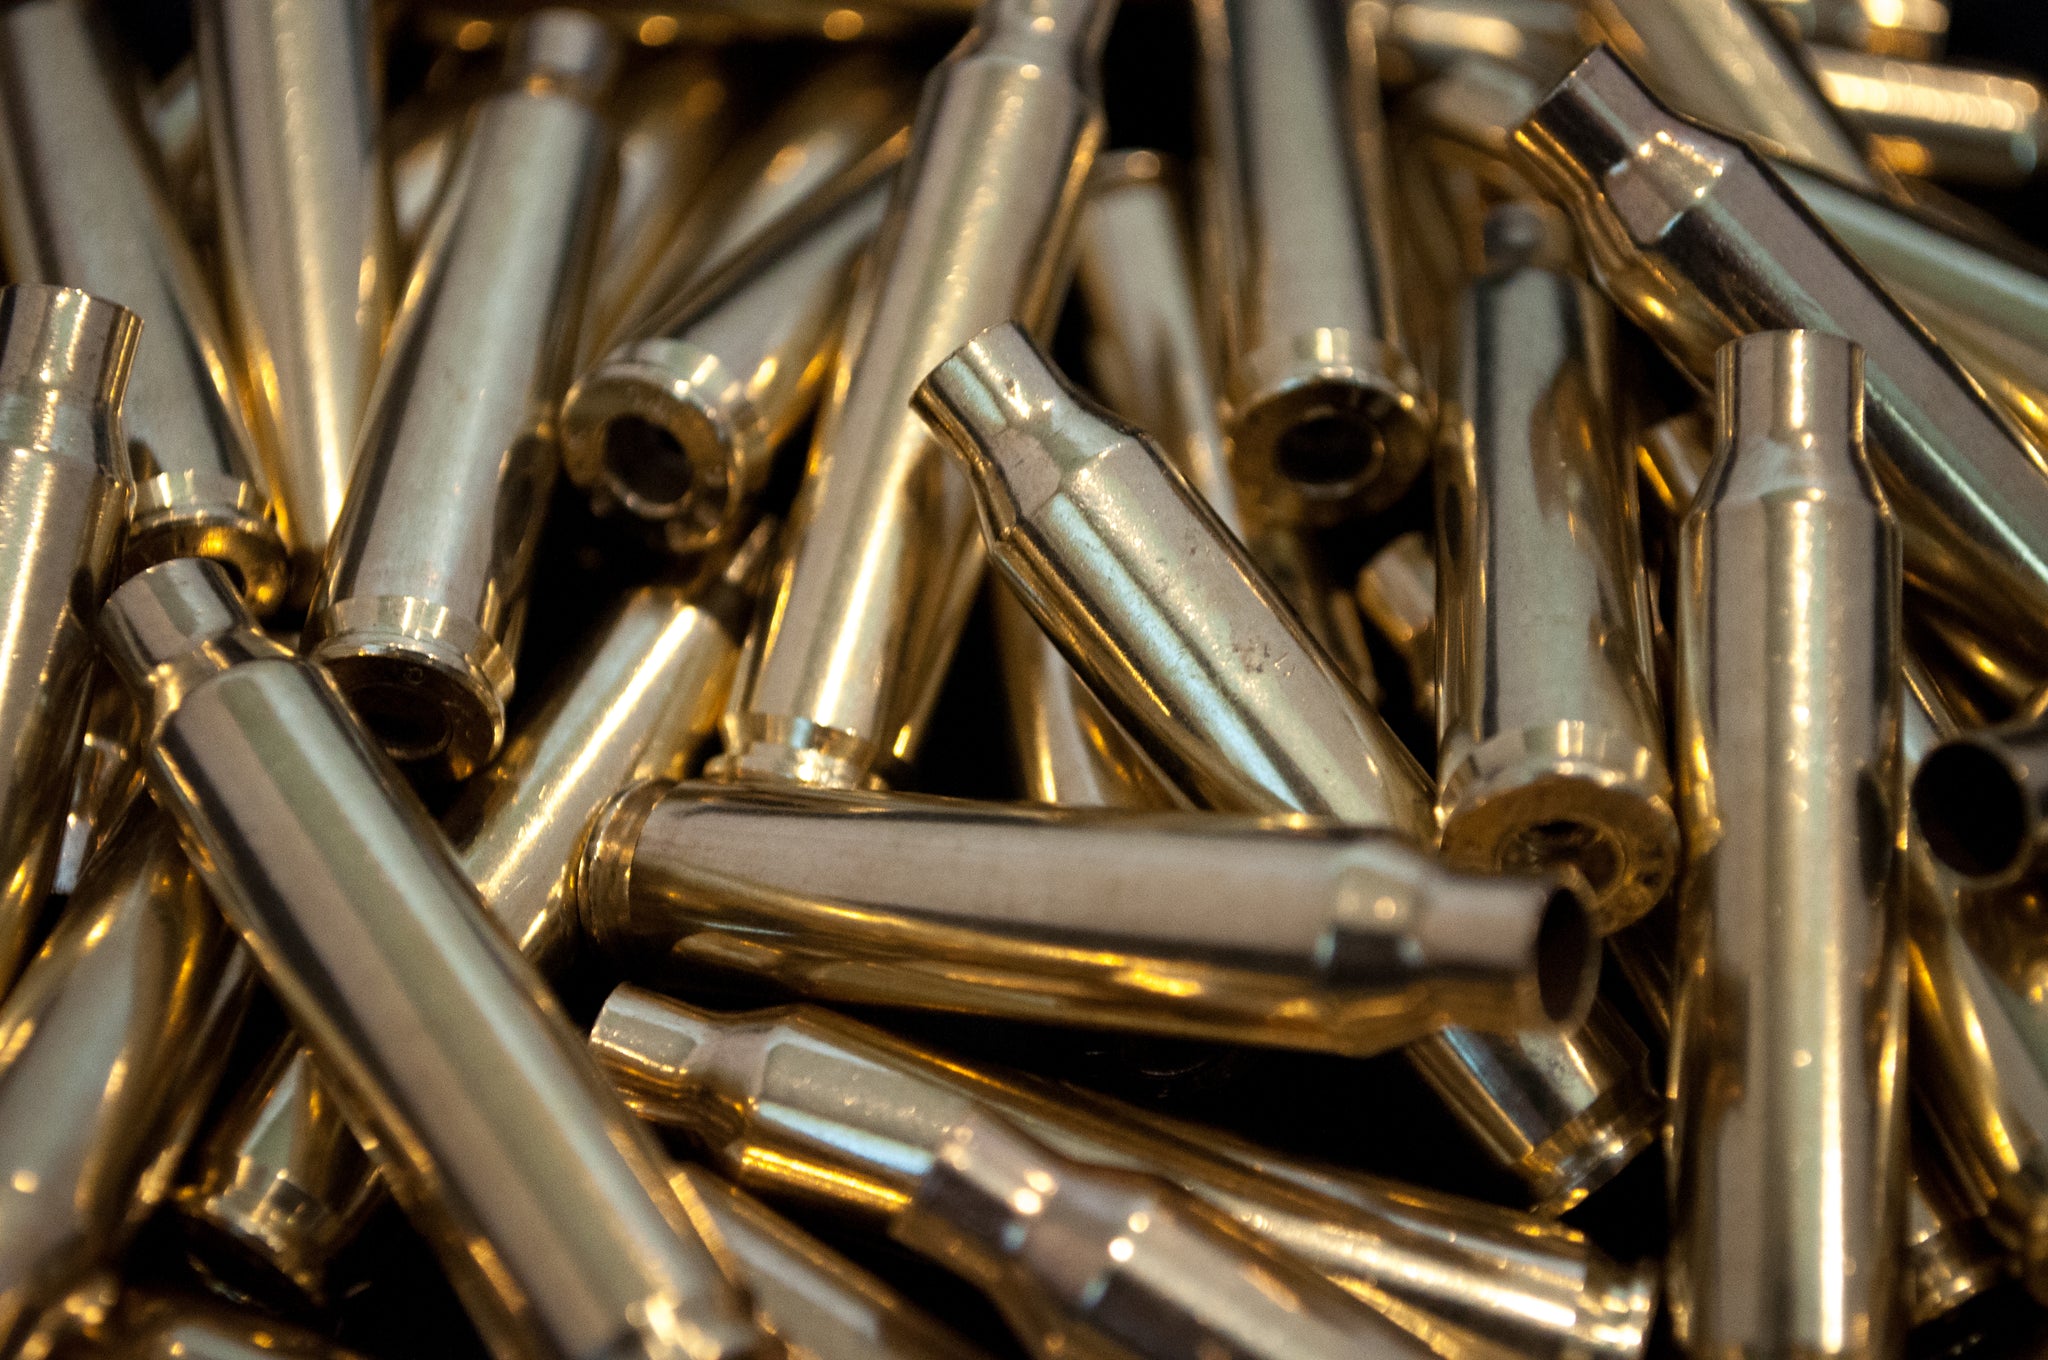 9mm brass bullets